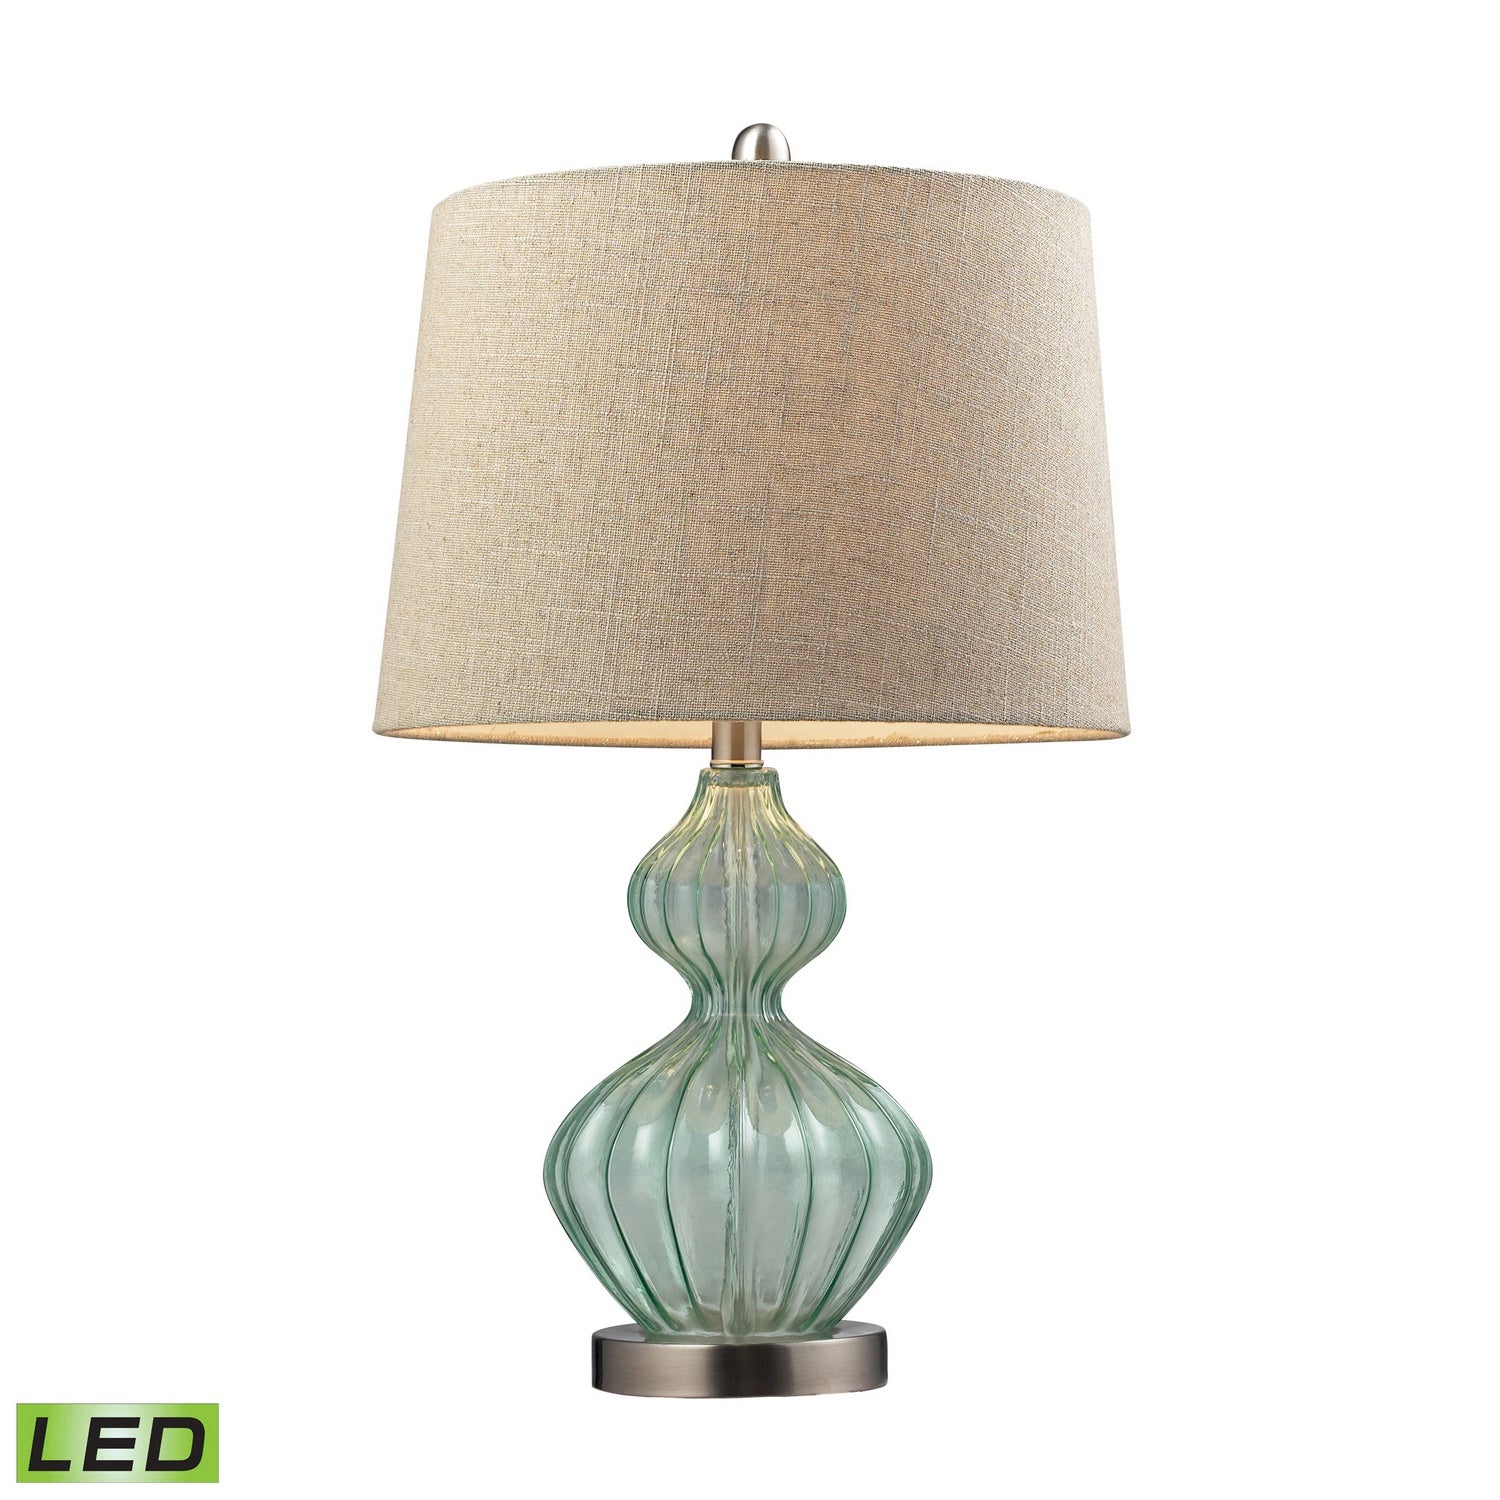 ELK Home - D141-LED - LED Table Lamp - Smoked Glass - Light Green